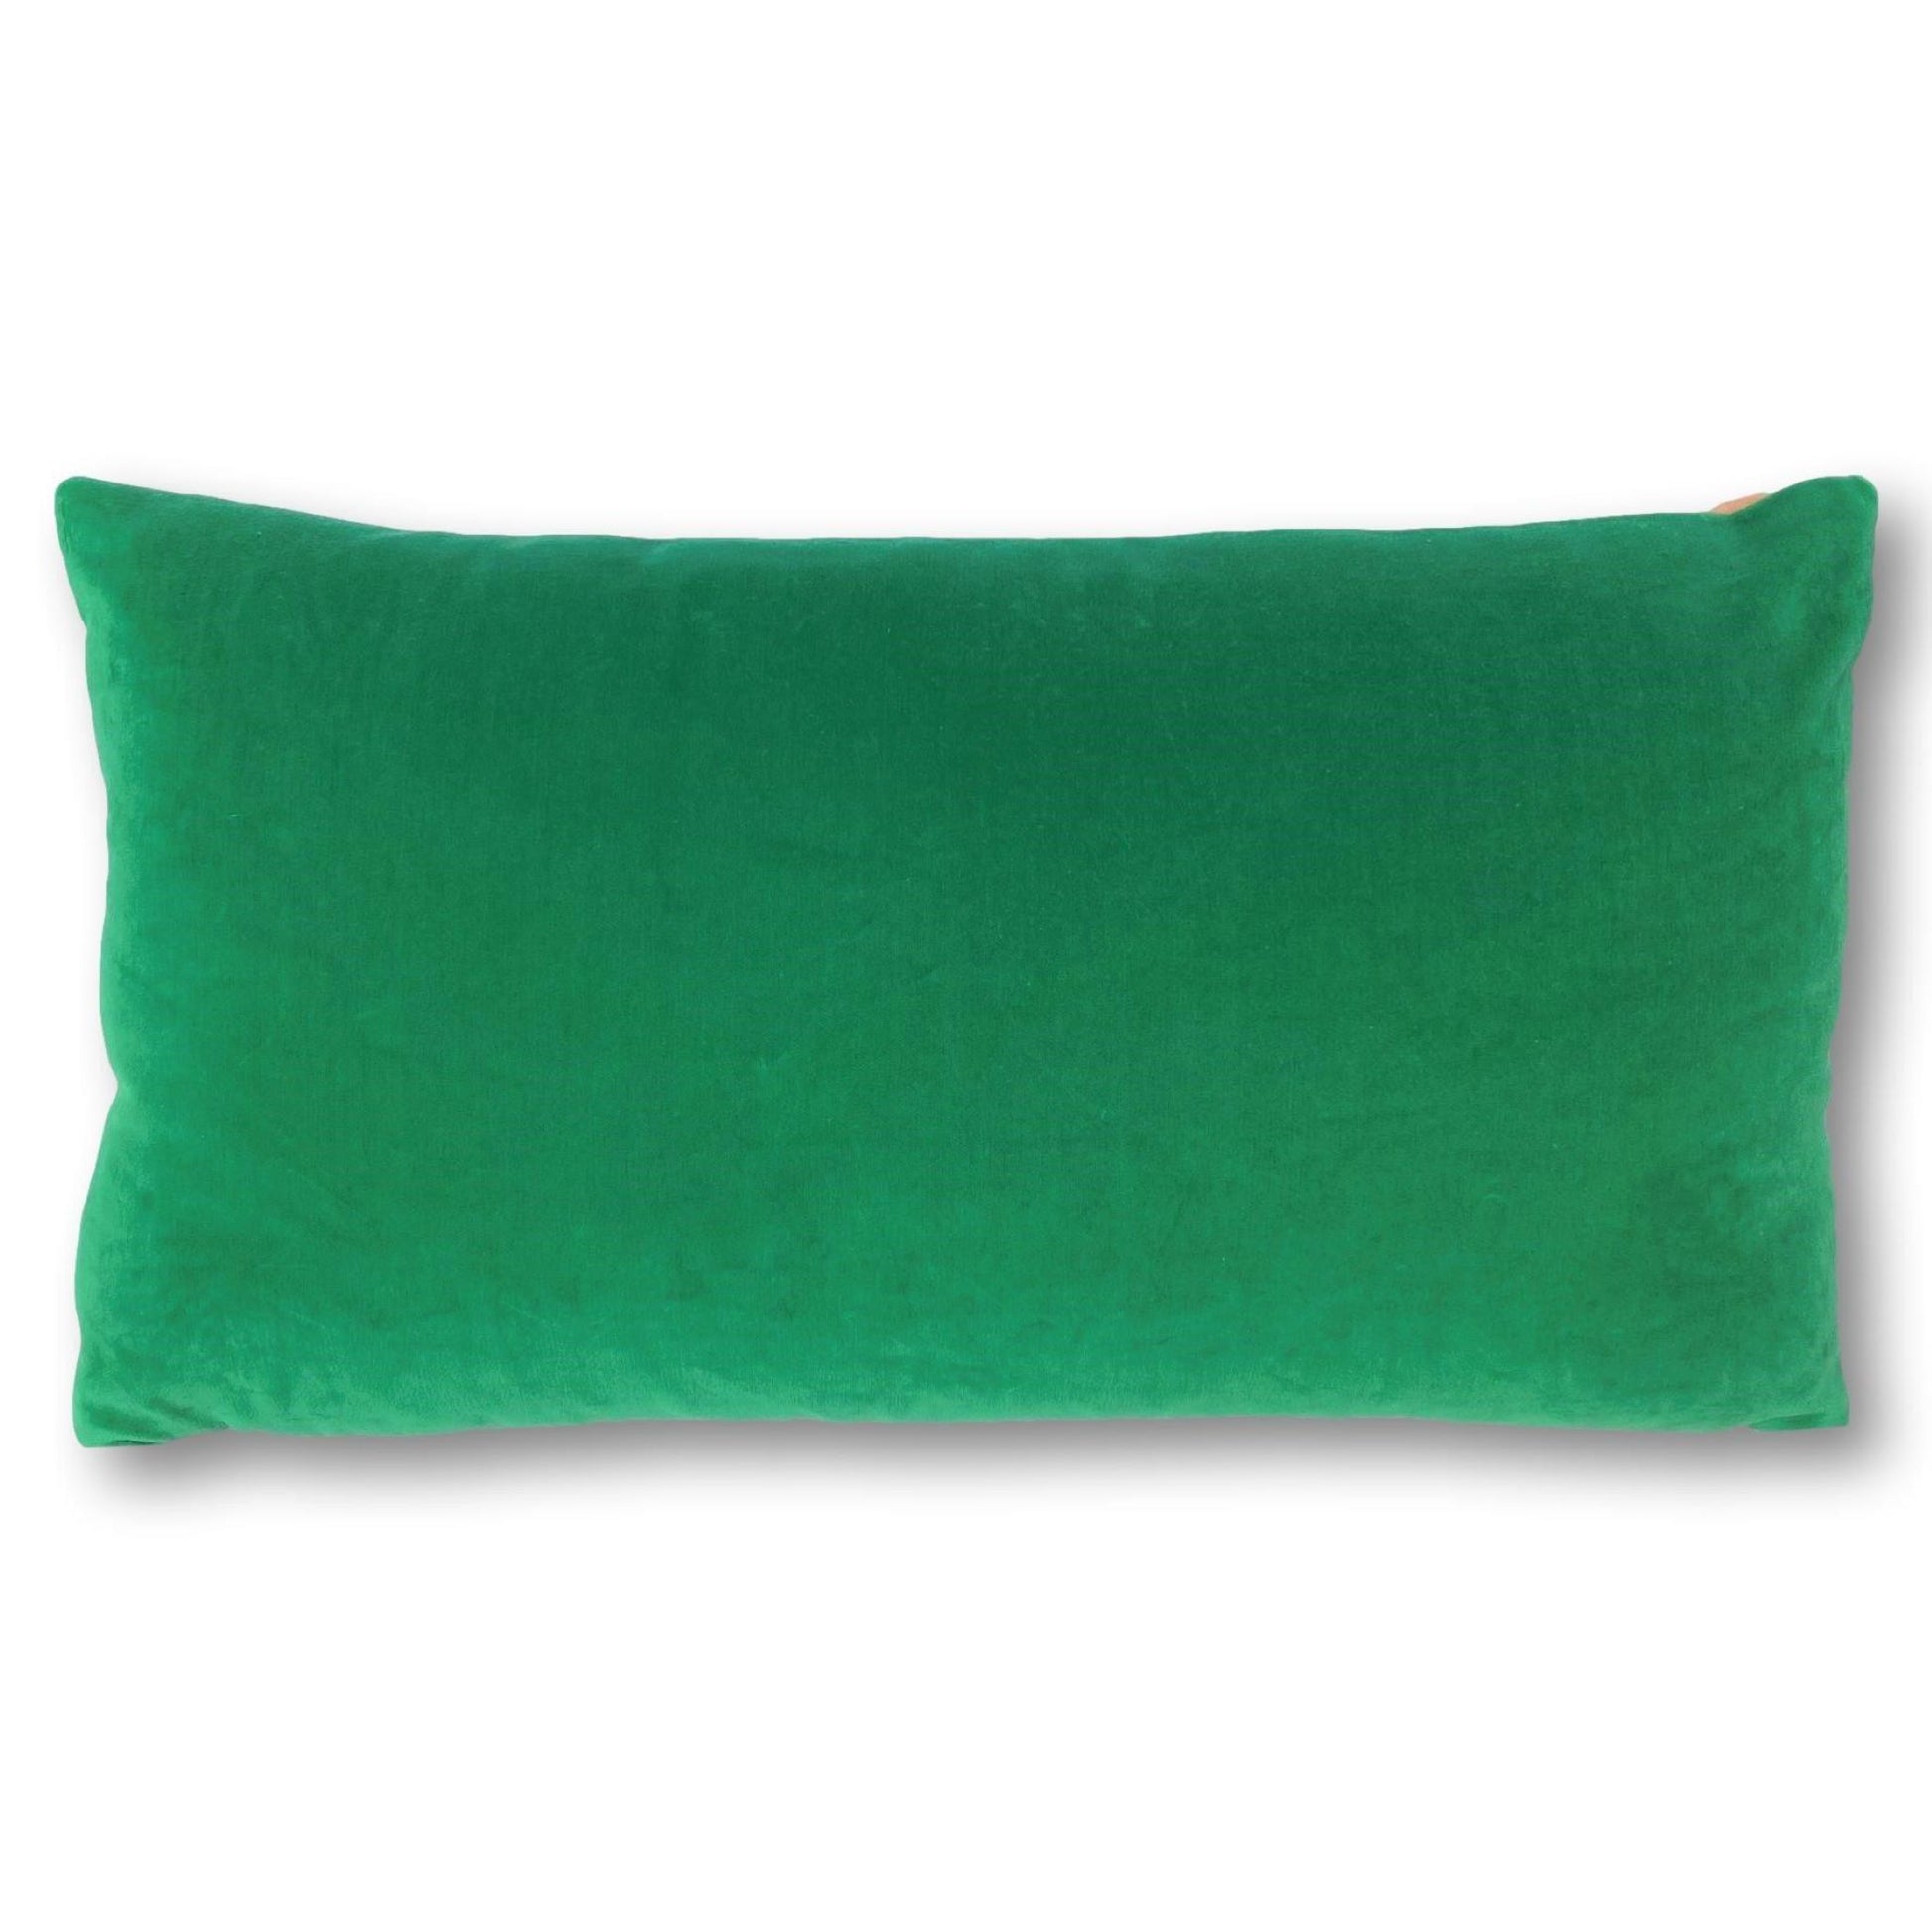 duck egg green cushions luxe 39